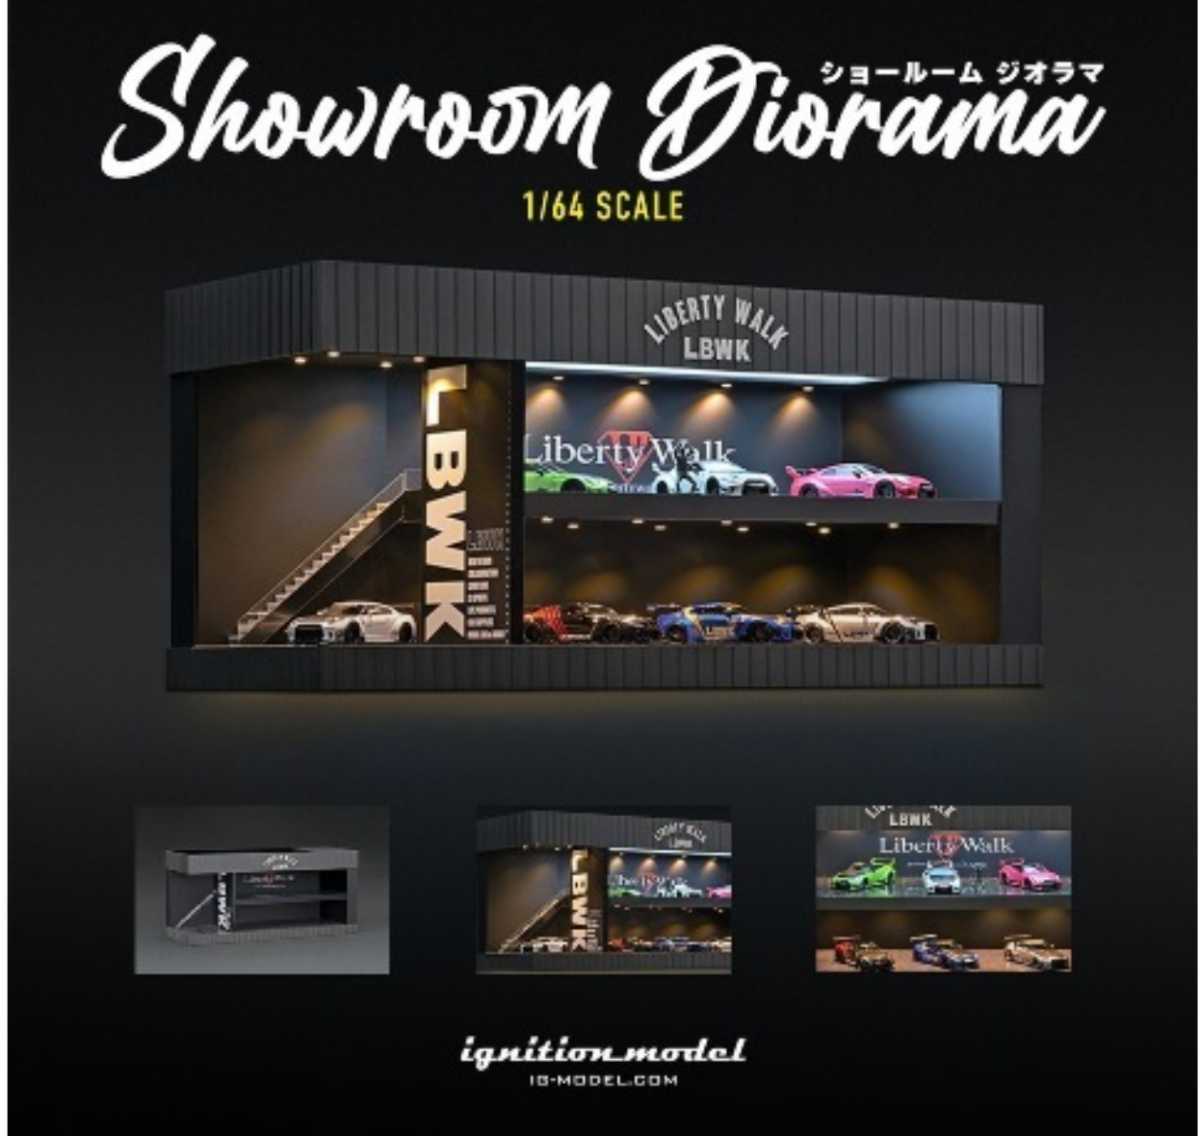 1/64 Scale IG-Model LB Showroom Diorama ショールーム ジオラマ